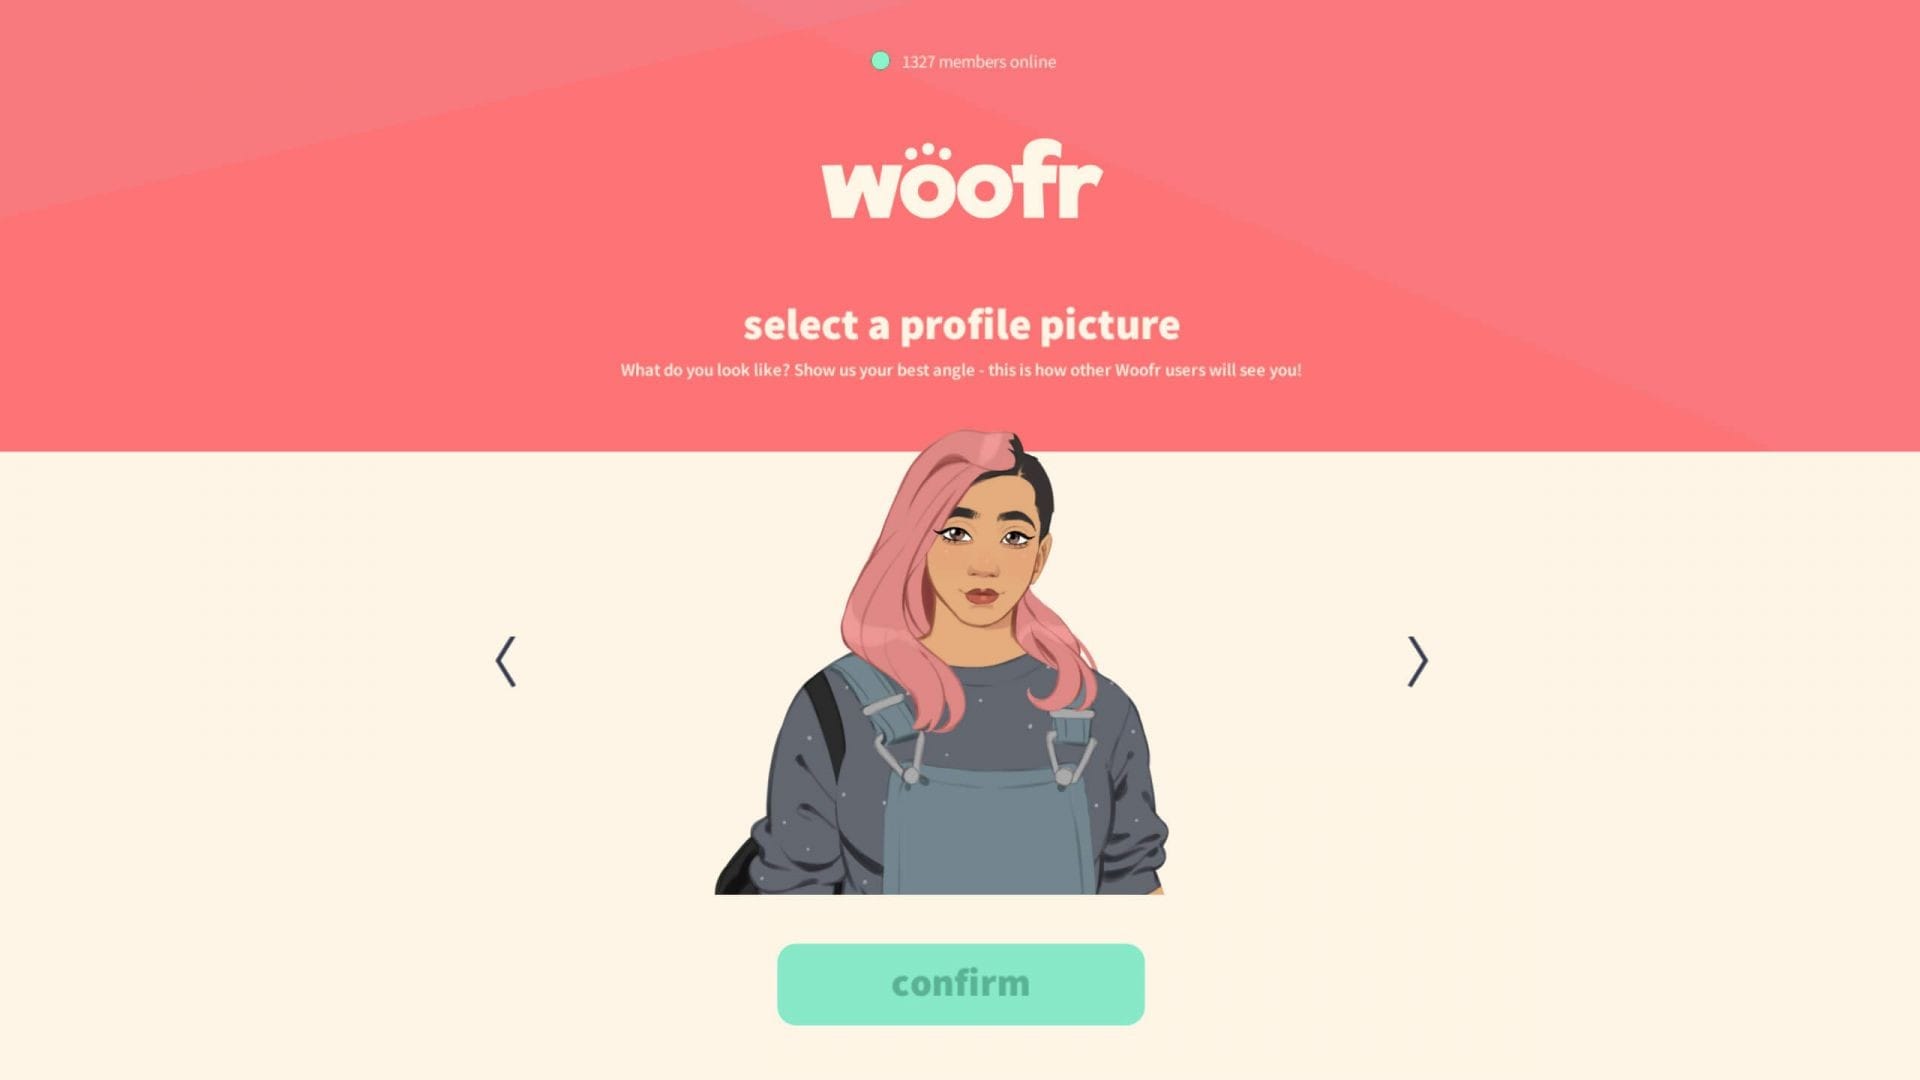 BFF screenshot - Woofr character select